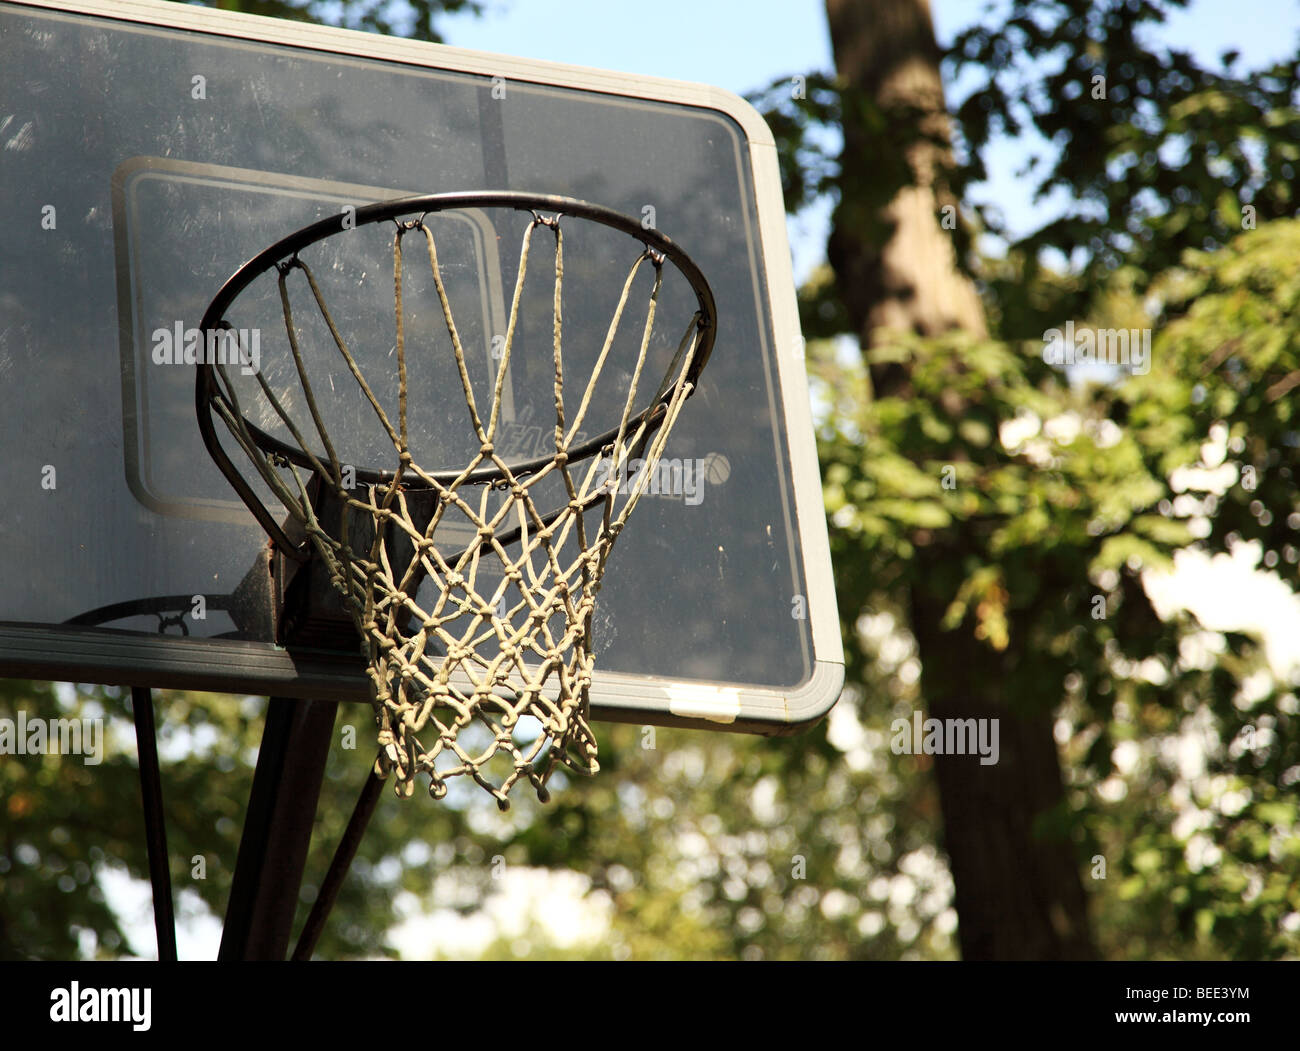 Un terrain de basket hoop dans un jardin de banlieue Banque D'Images